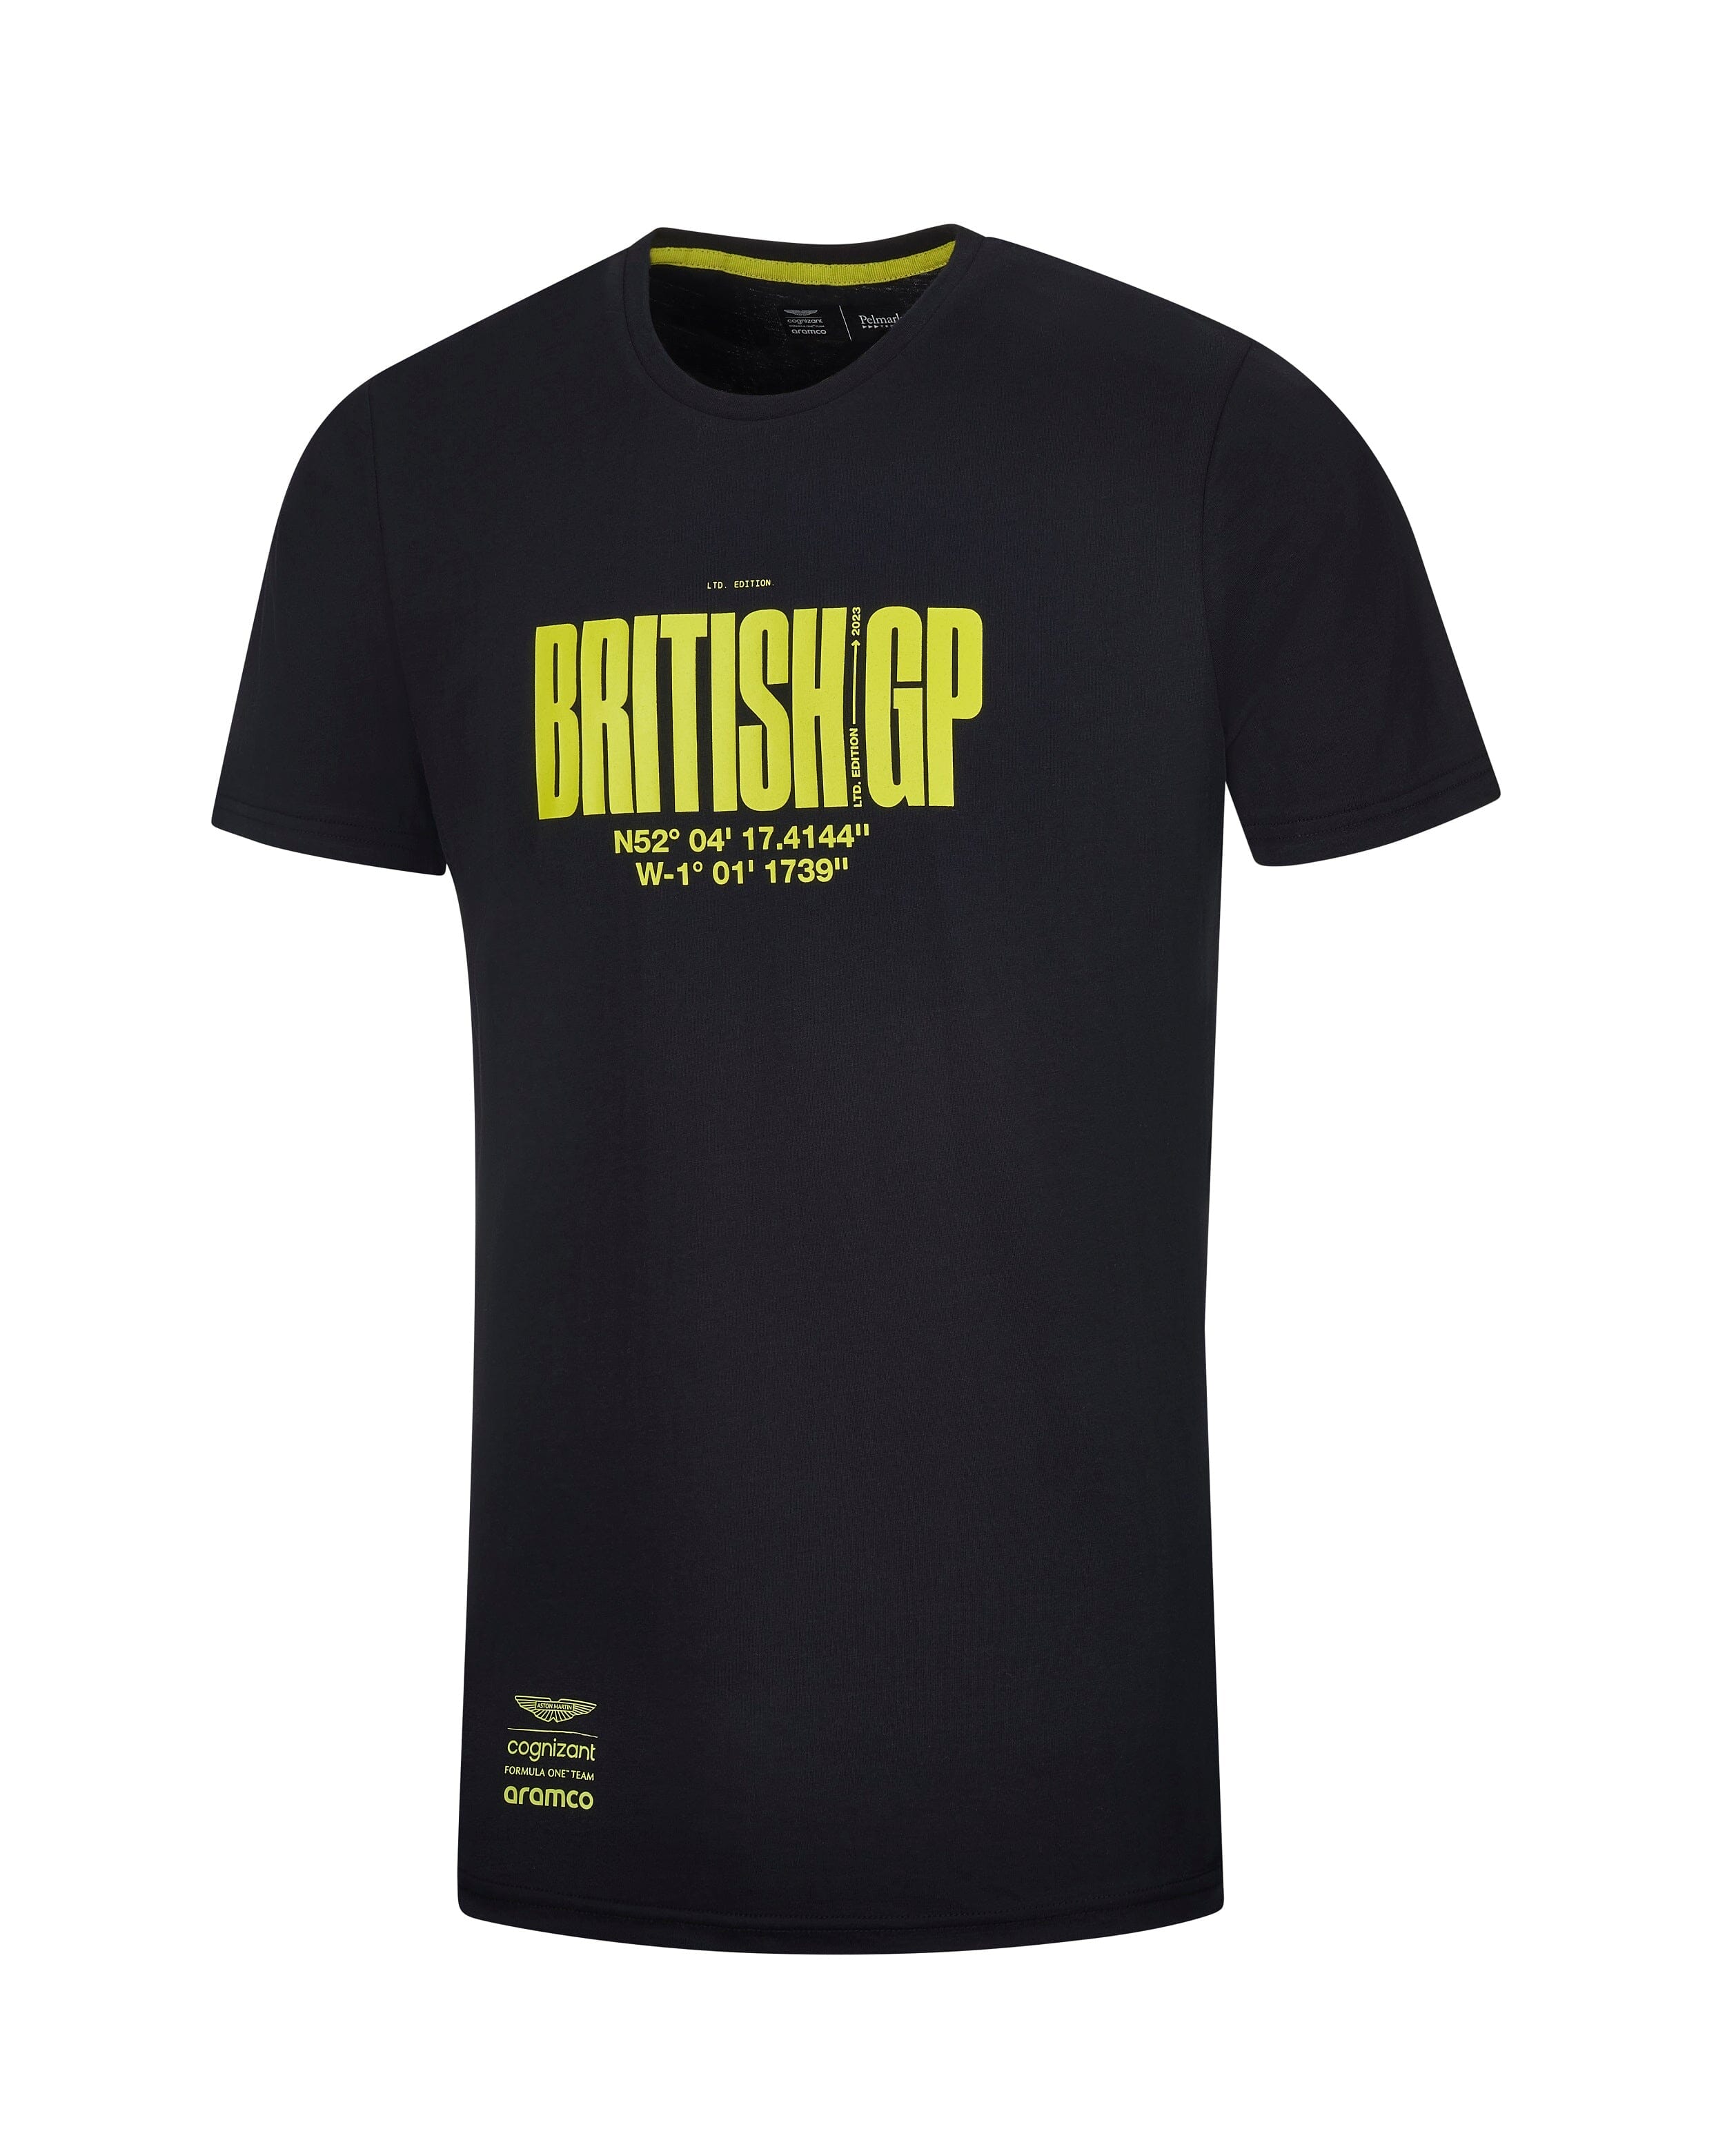 Aston Martin F1 Men's Limited Edition British GP T-Shirt - Black